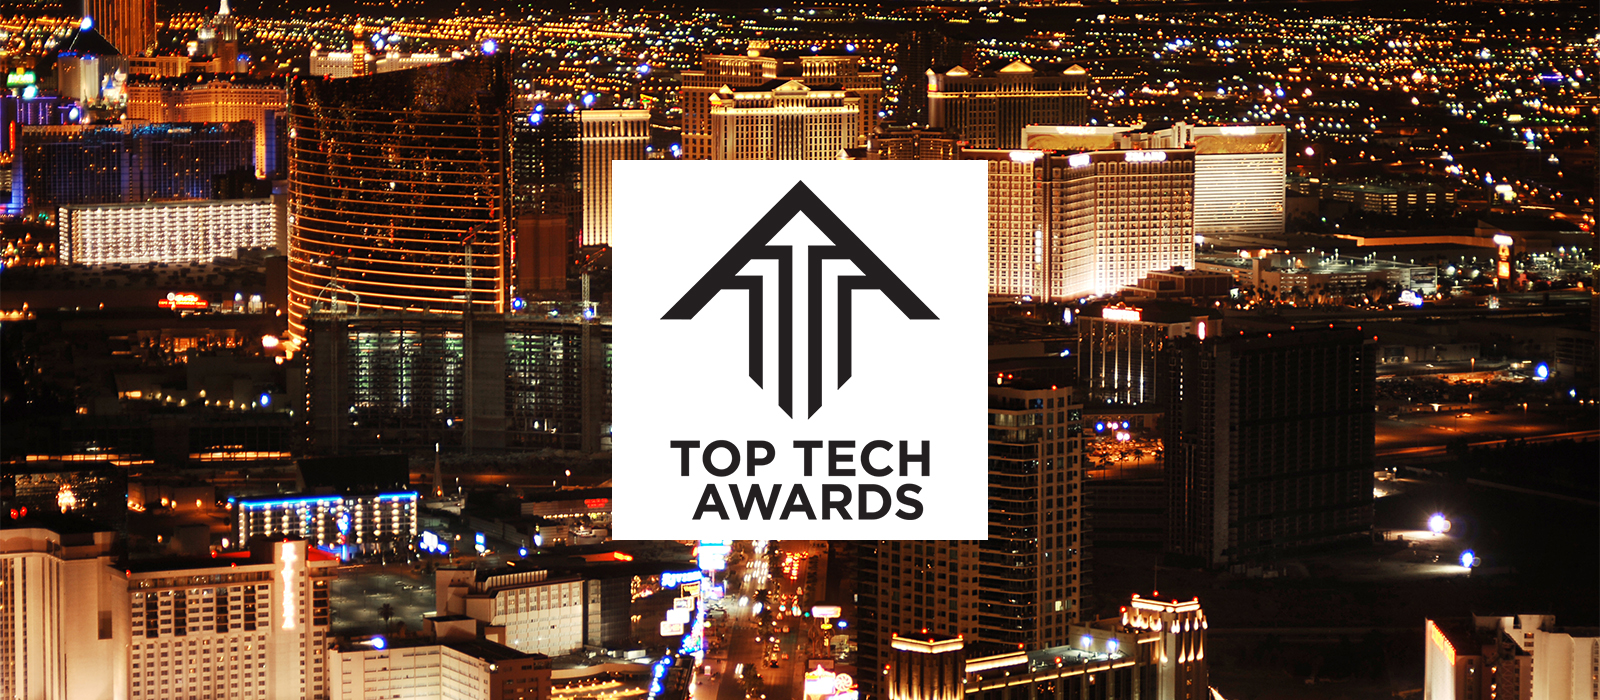 Top Tech Awards banner